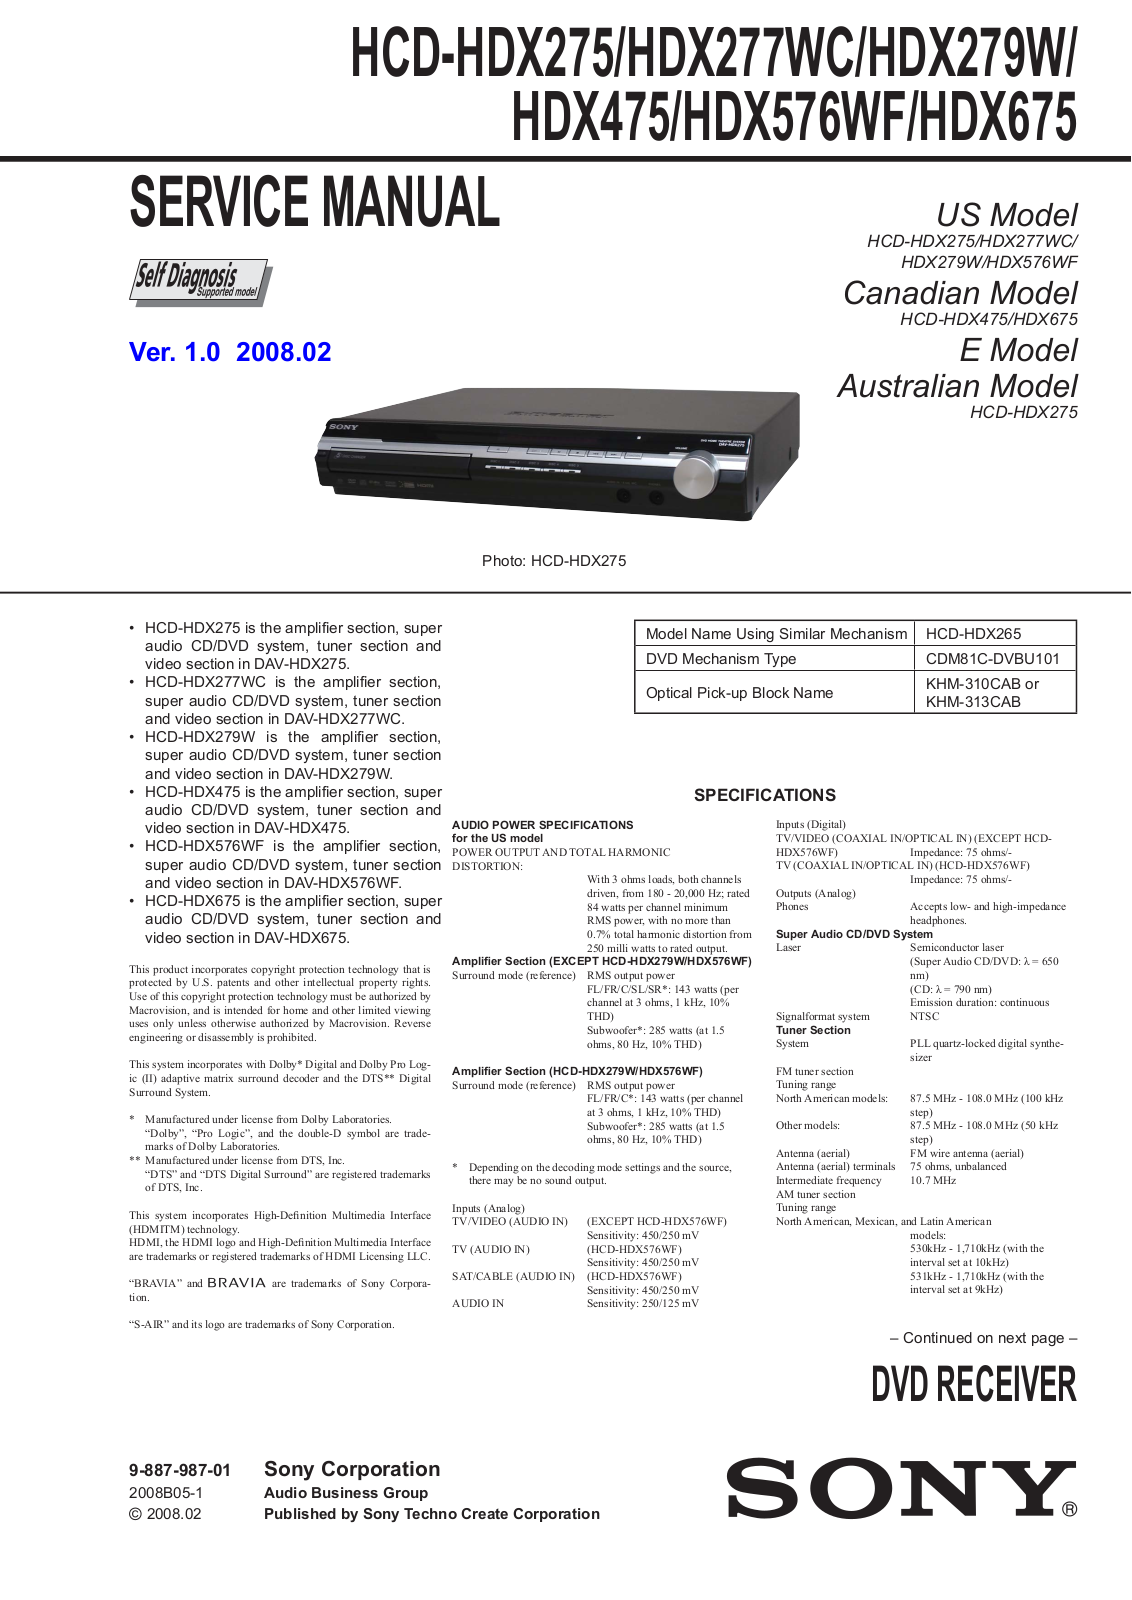 Sony HCD-HDX275, HCD-HDX277WC, HCD-HDX279W, HCD-HDX475, HCD-HDX576WF Service Manual